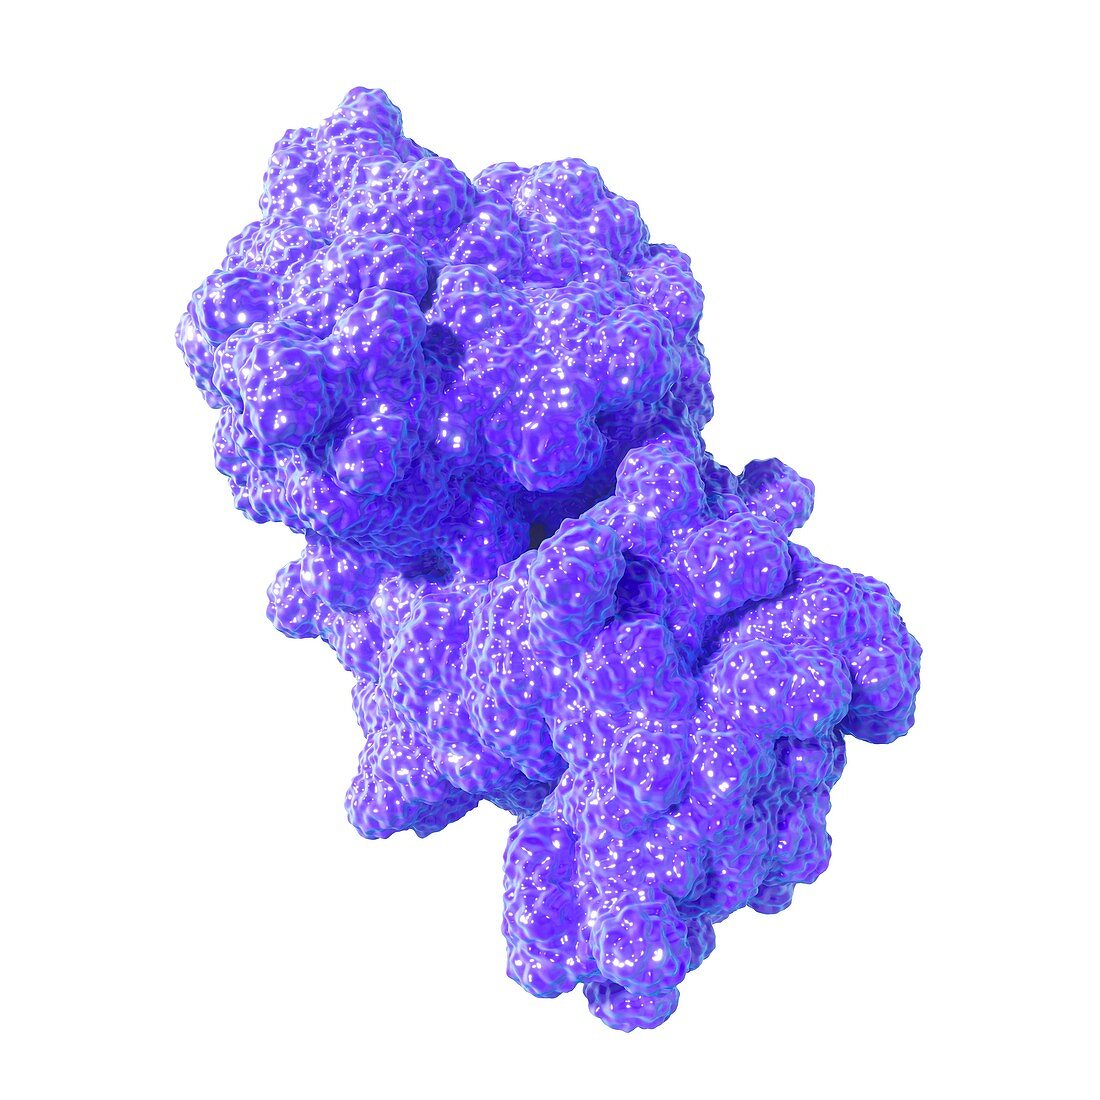 PCSK9 enzyme molecule,illustration